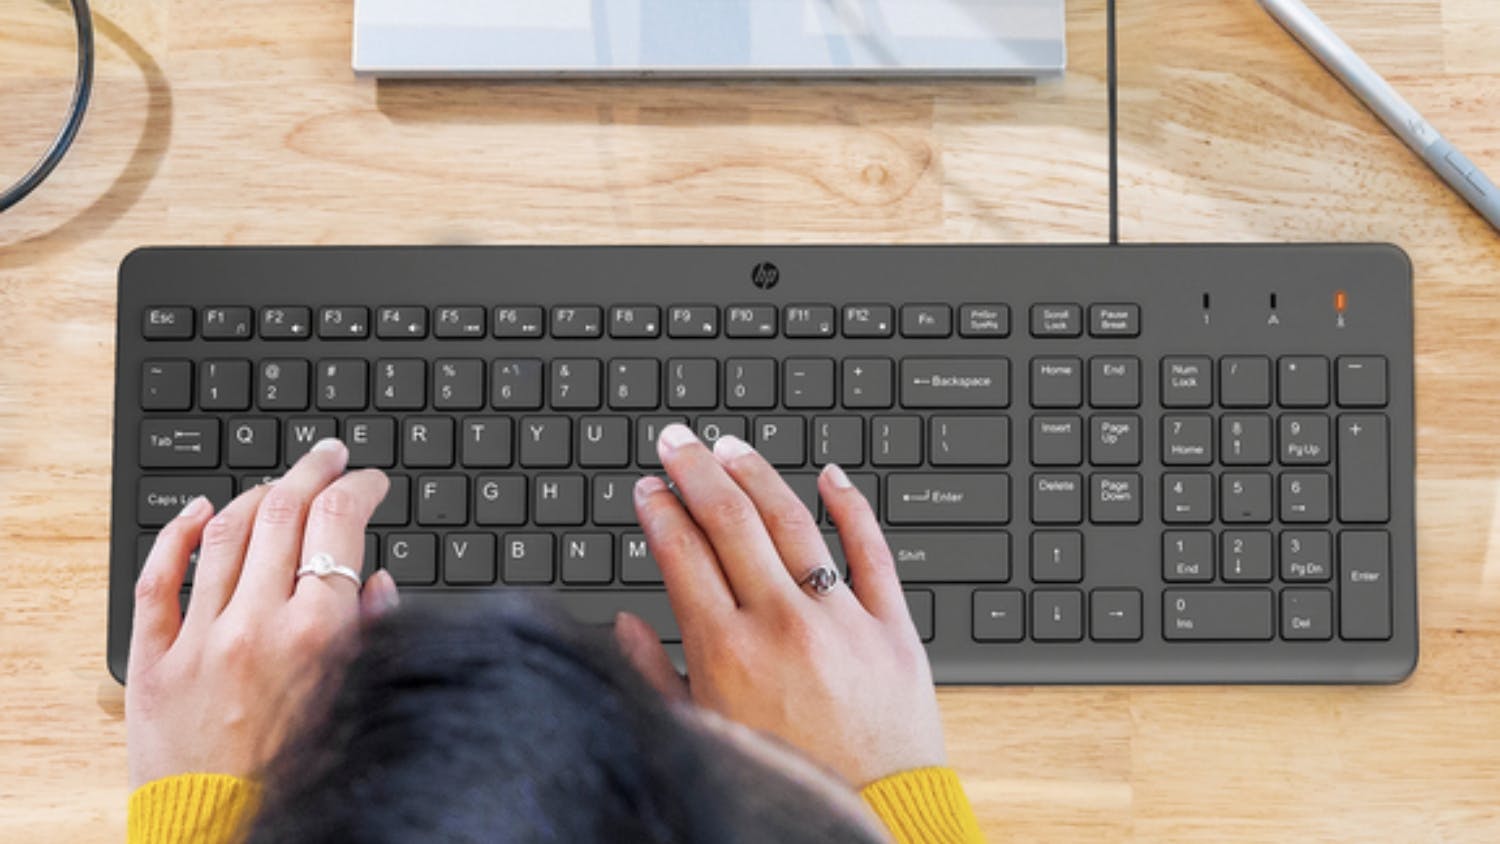 HP 150 Wired Keyboard - Black